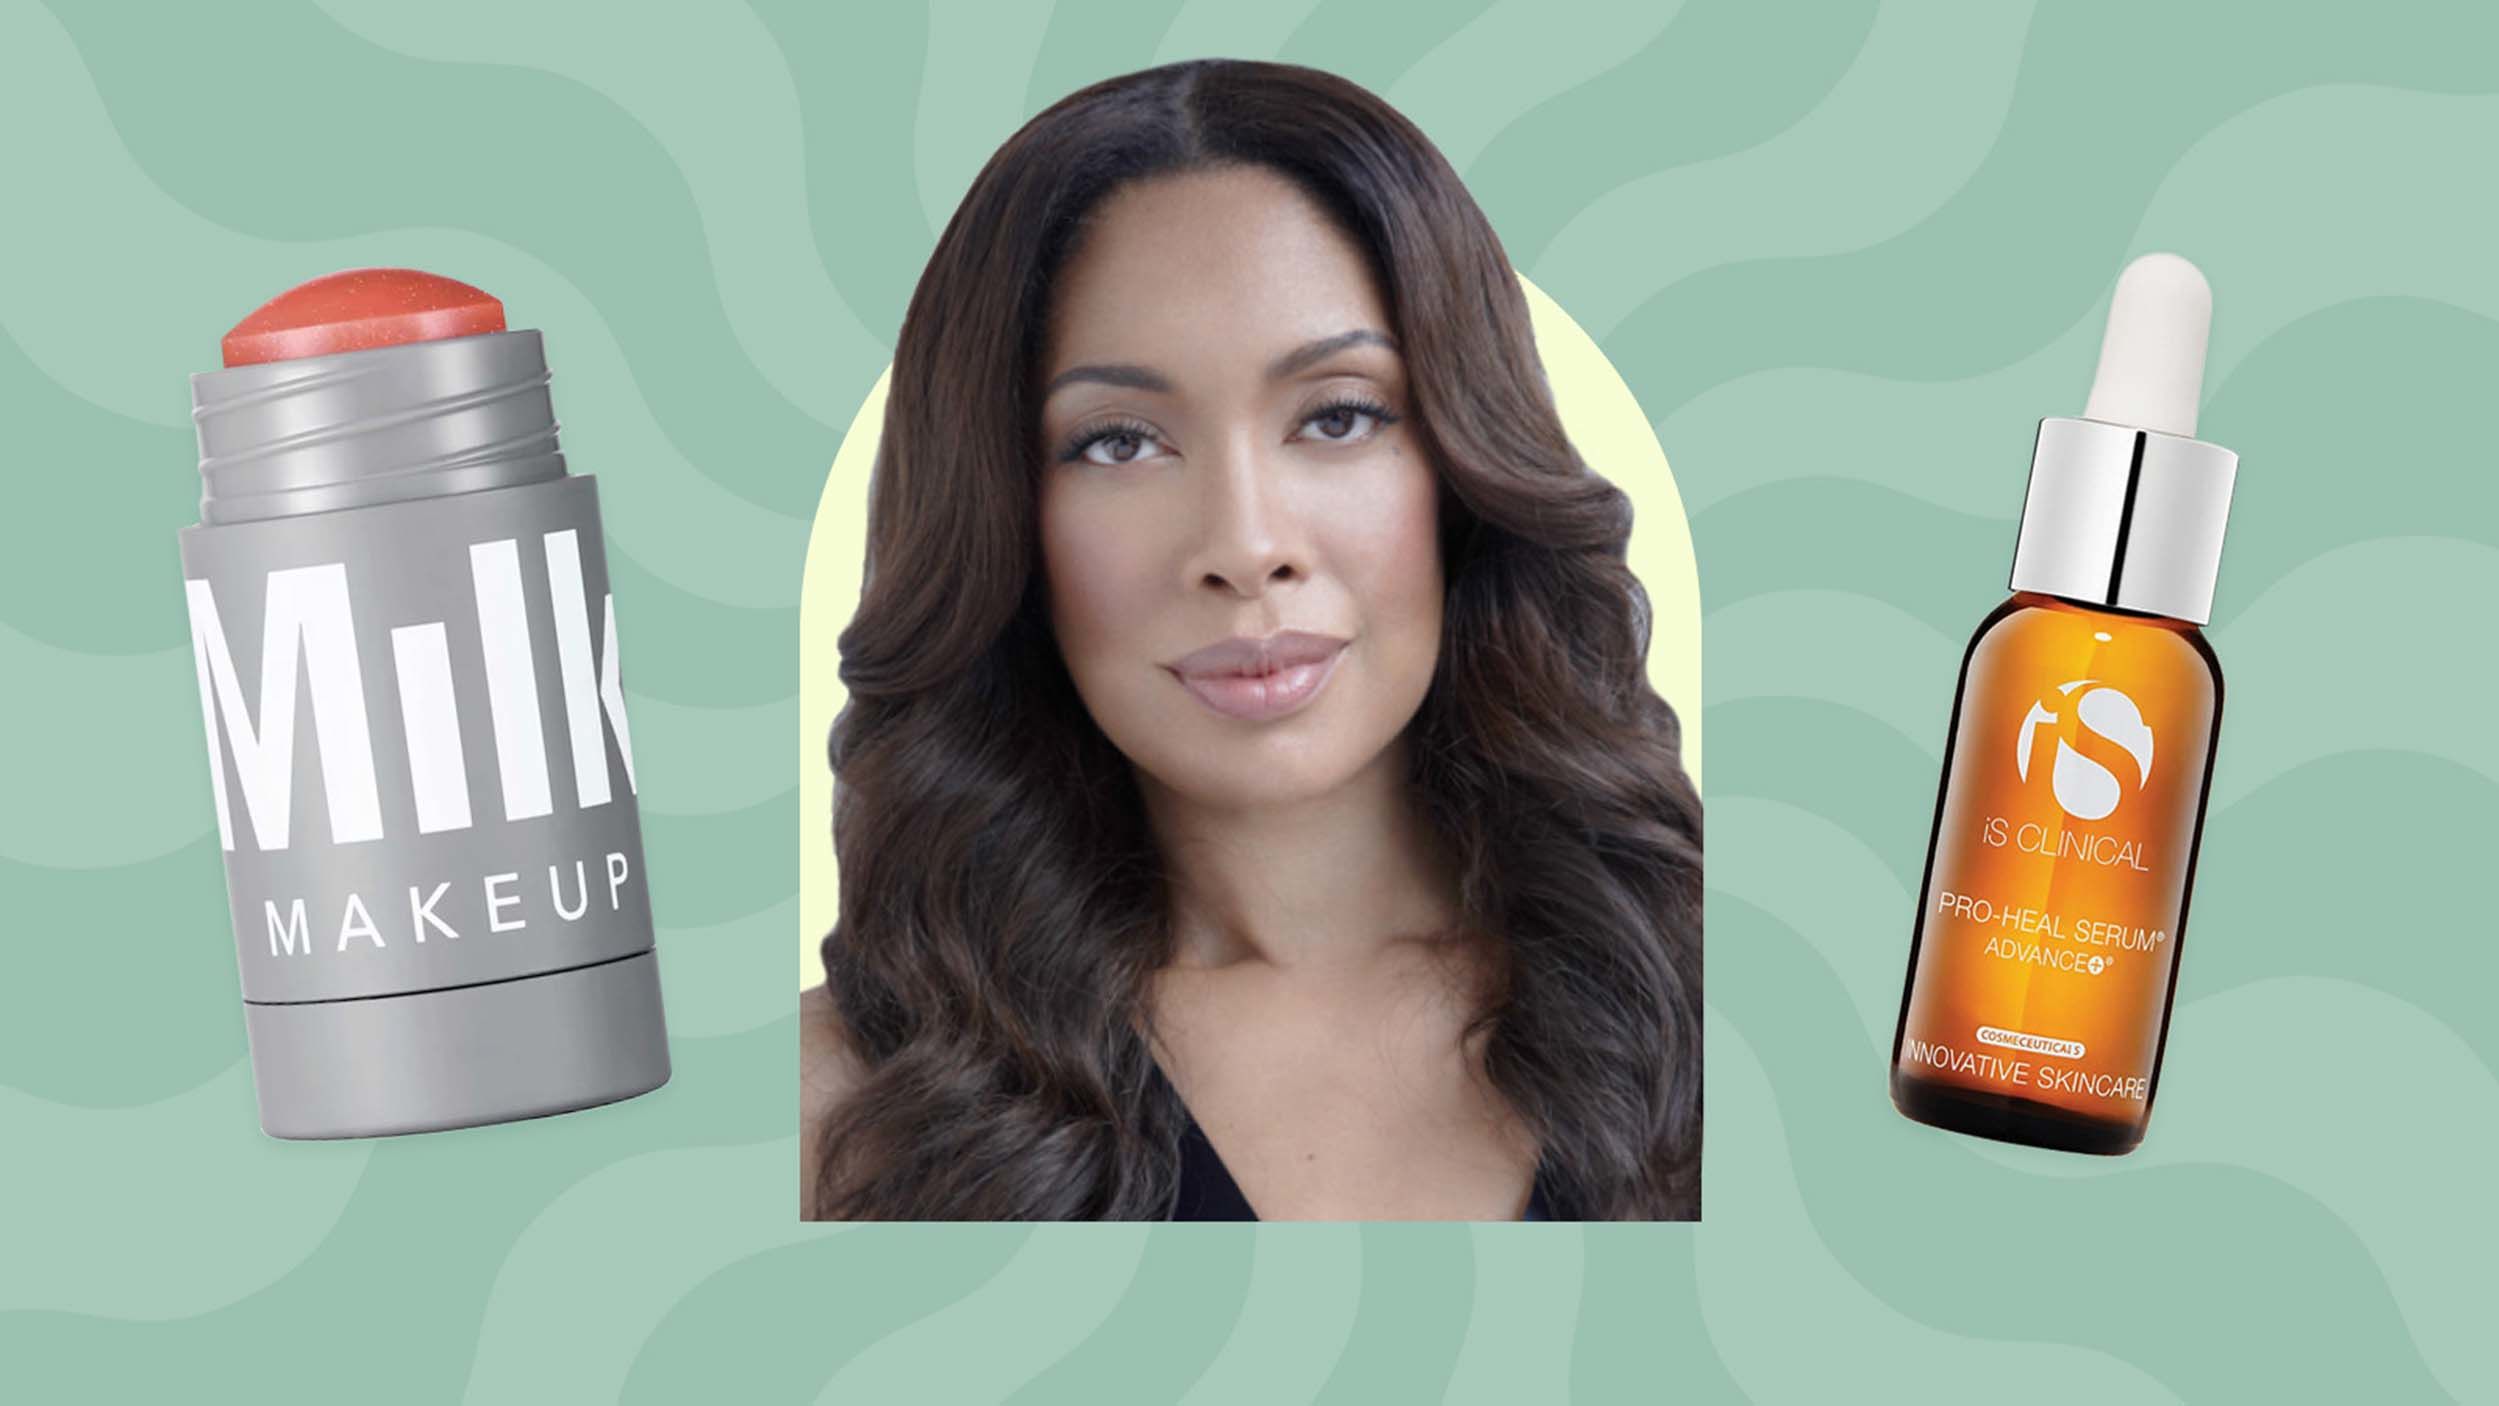 Gina Torres shares her beauty essentials